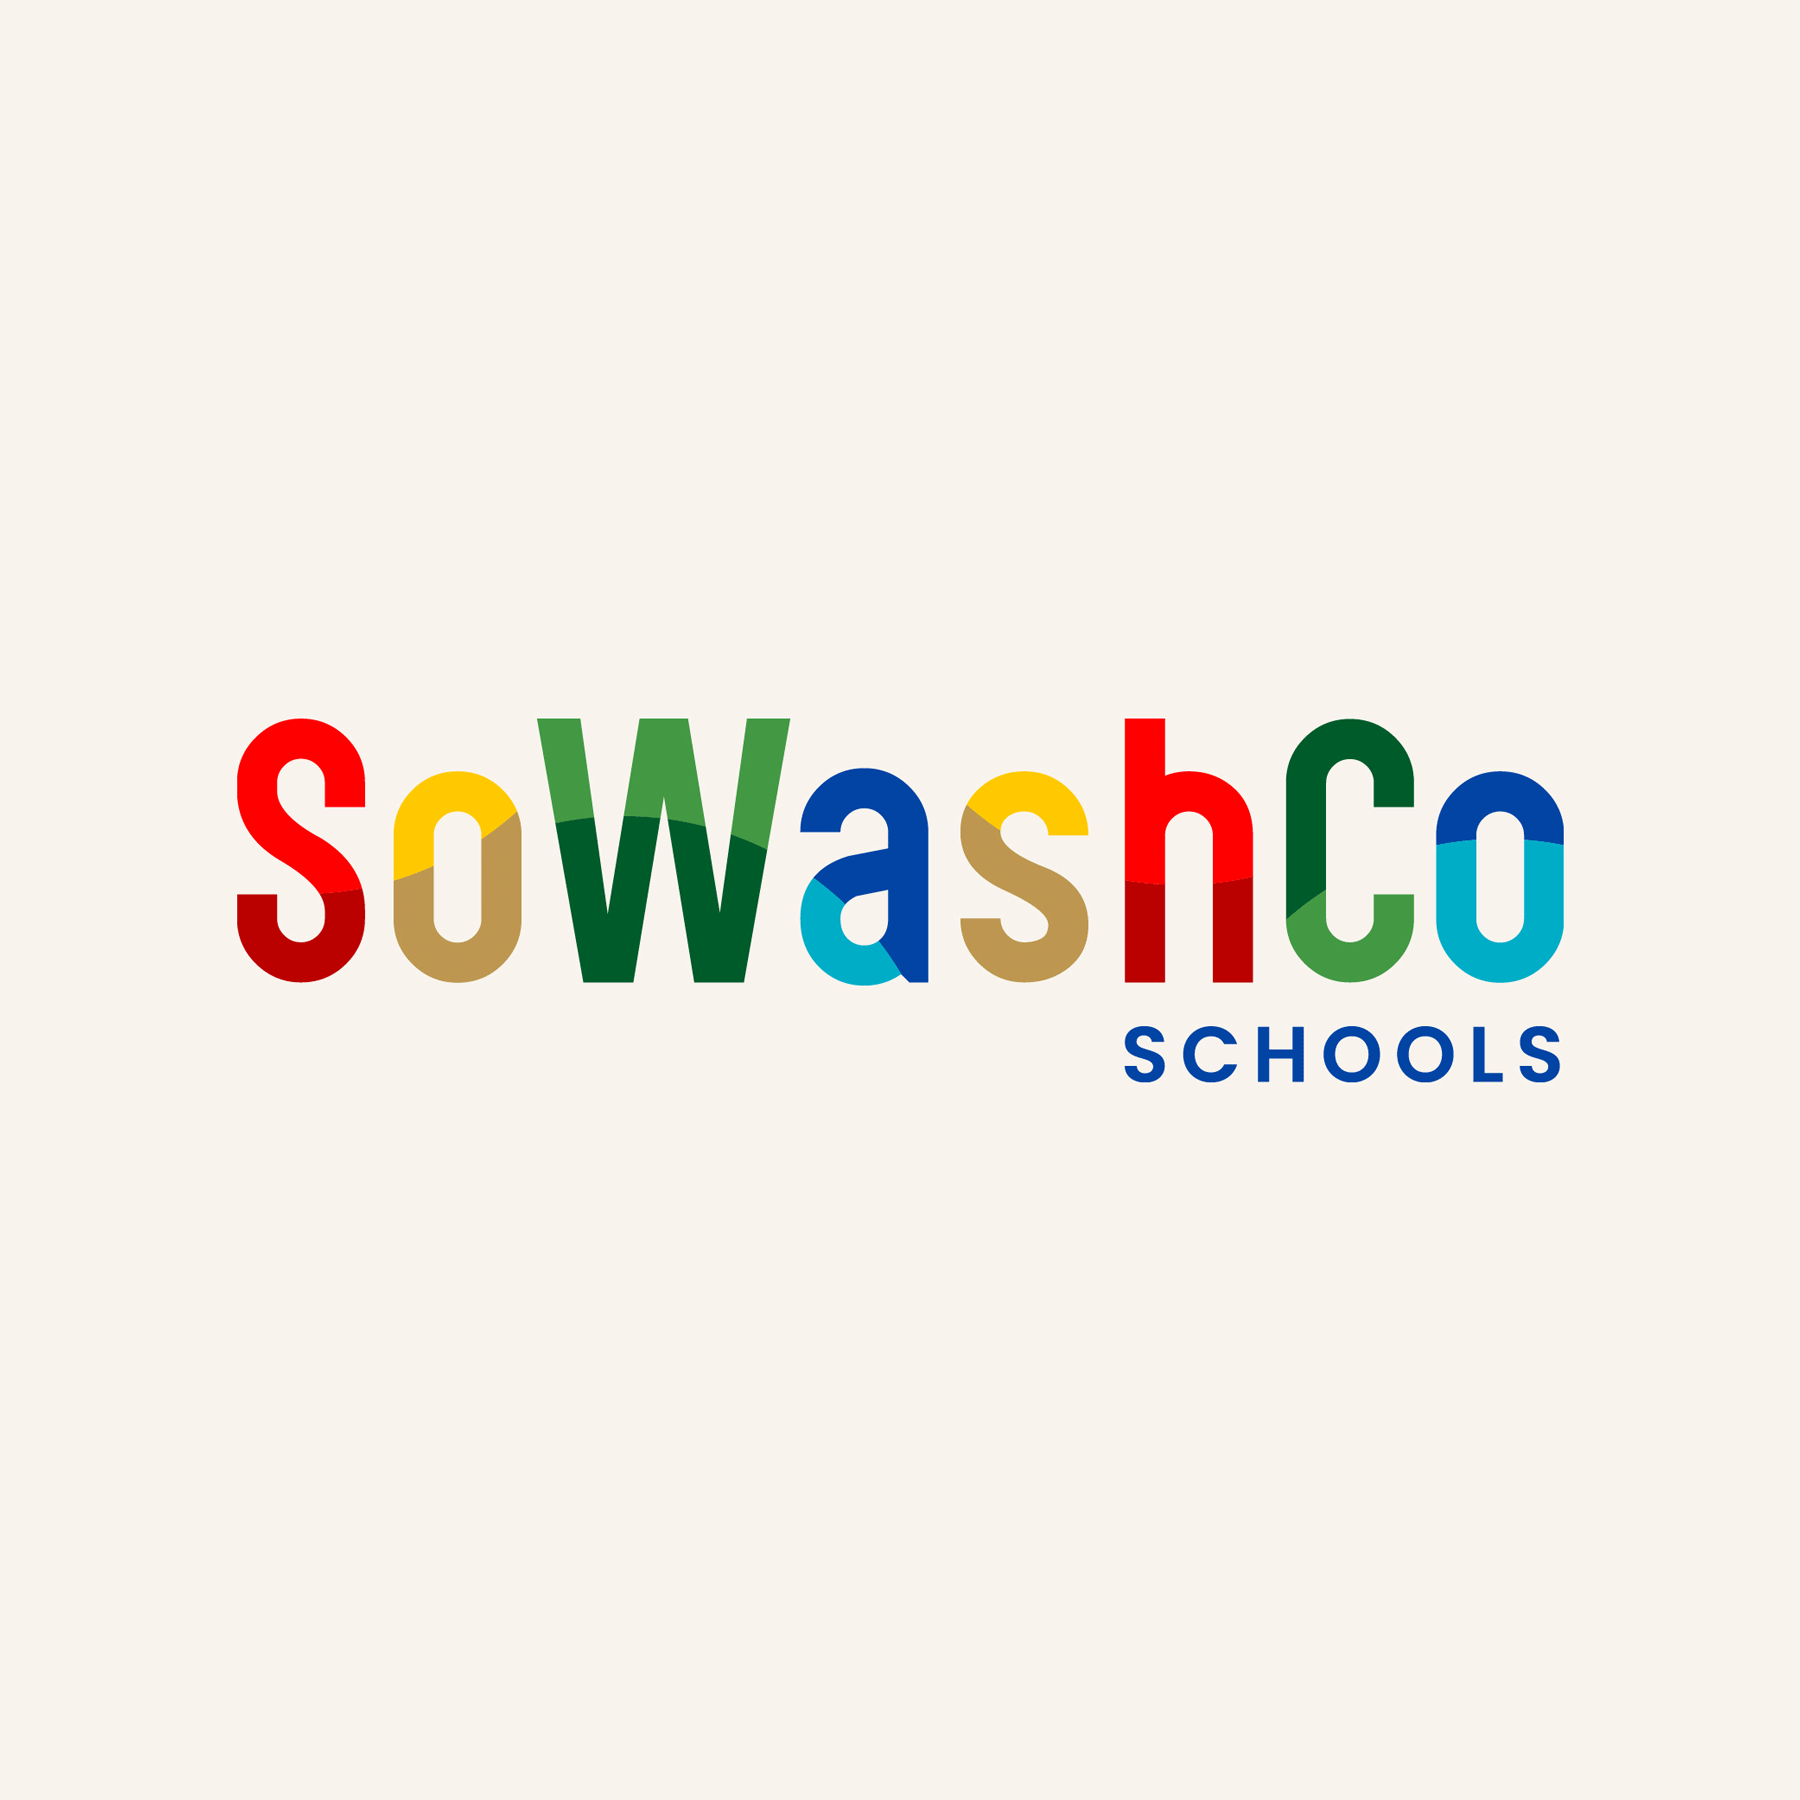 sowashco schools logos